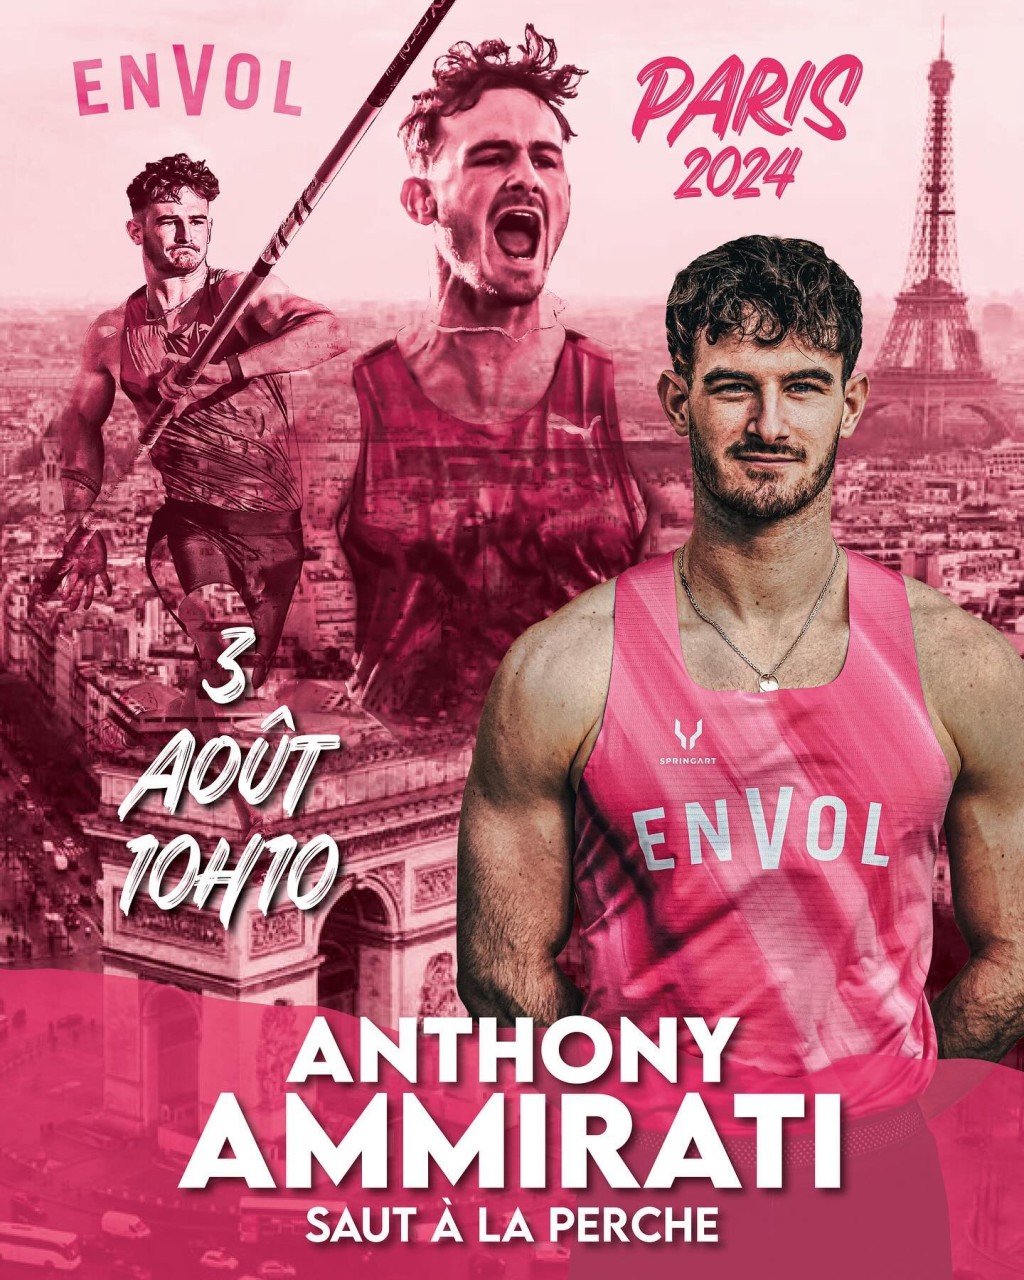 Anthony Ammirati雄心勃勃首度挑戰奧運。